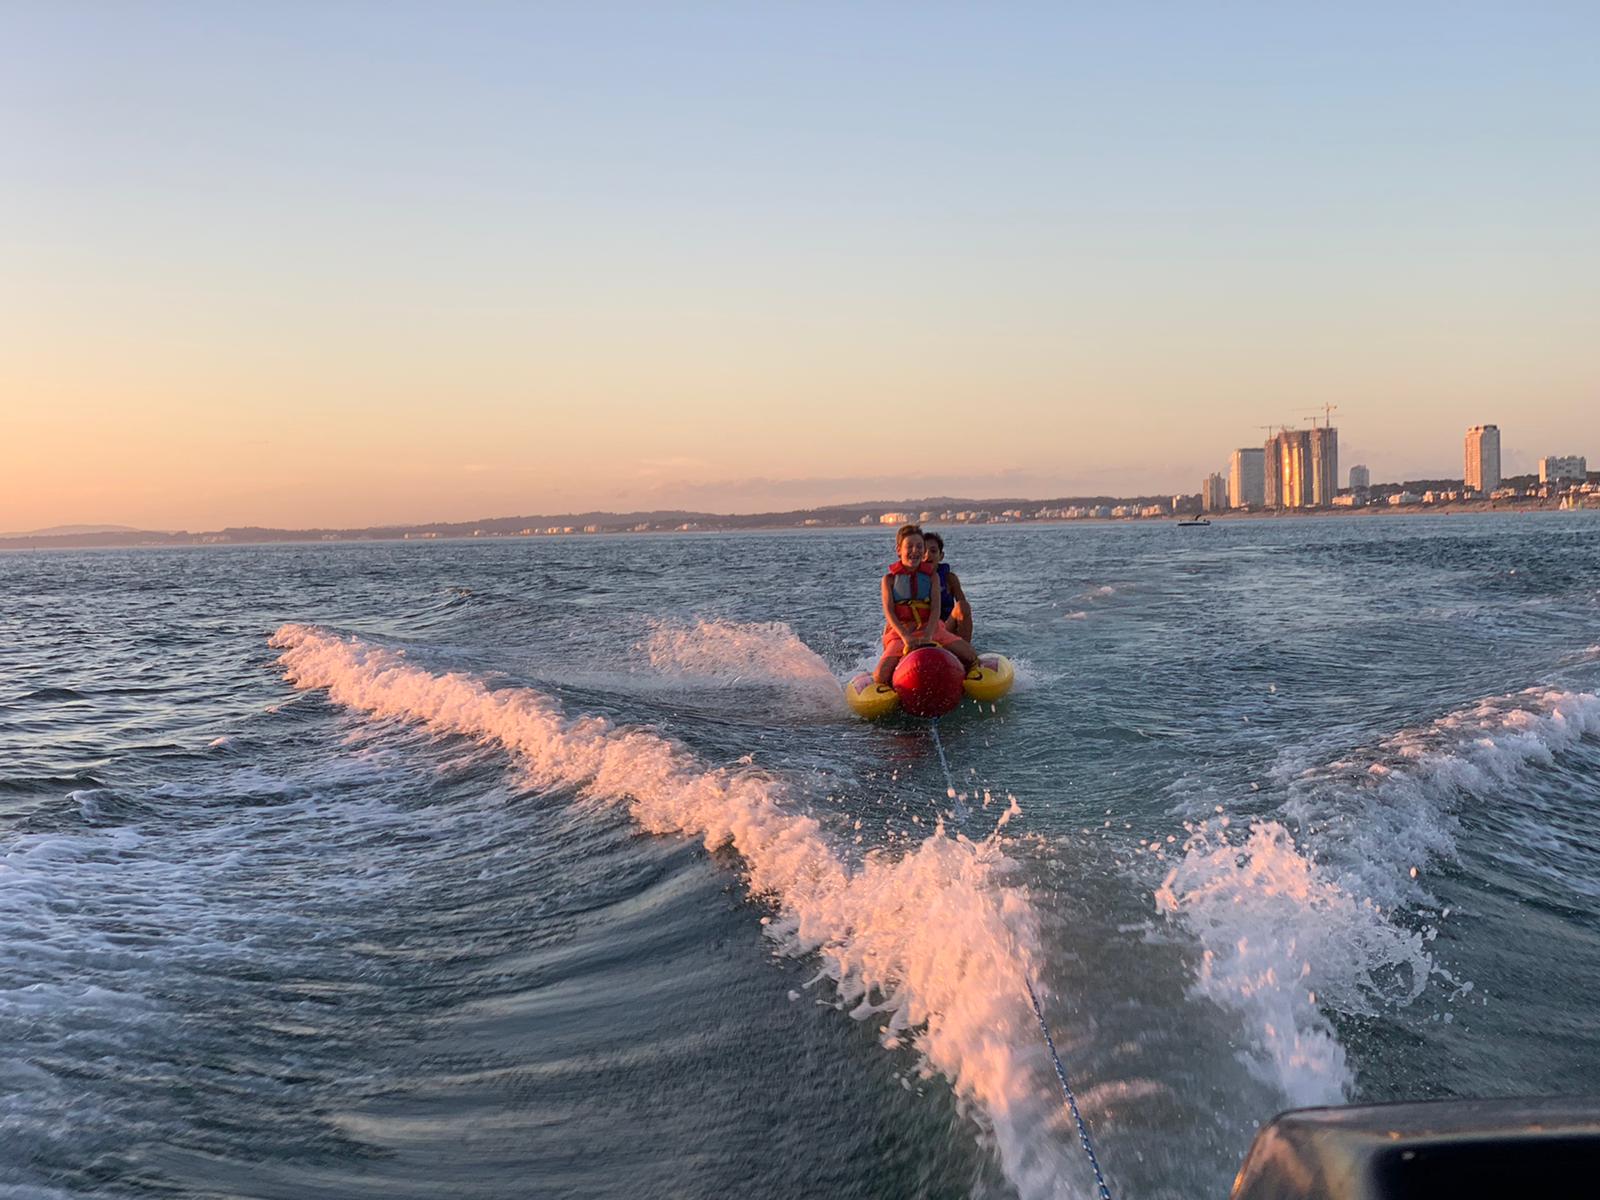 Alquiler lancha barco banana wakeboard rosca inflable Punta del Este paseo isla Gorriti